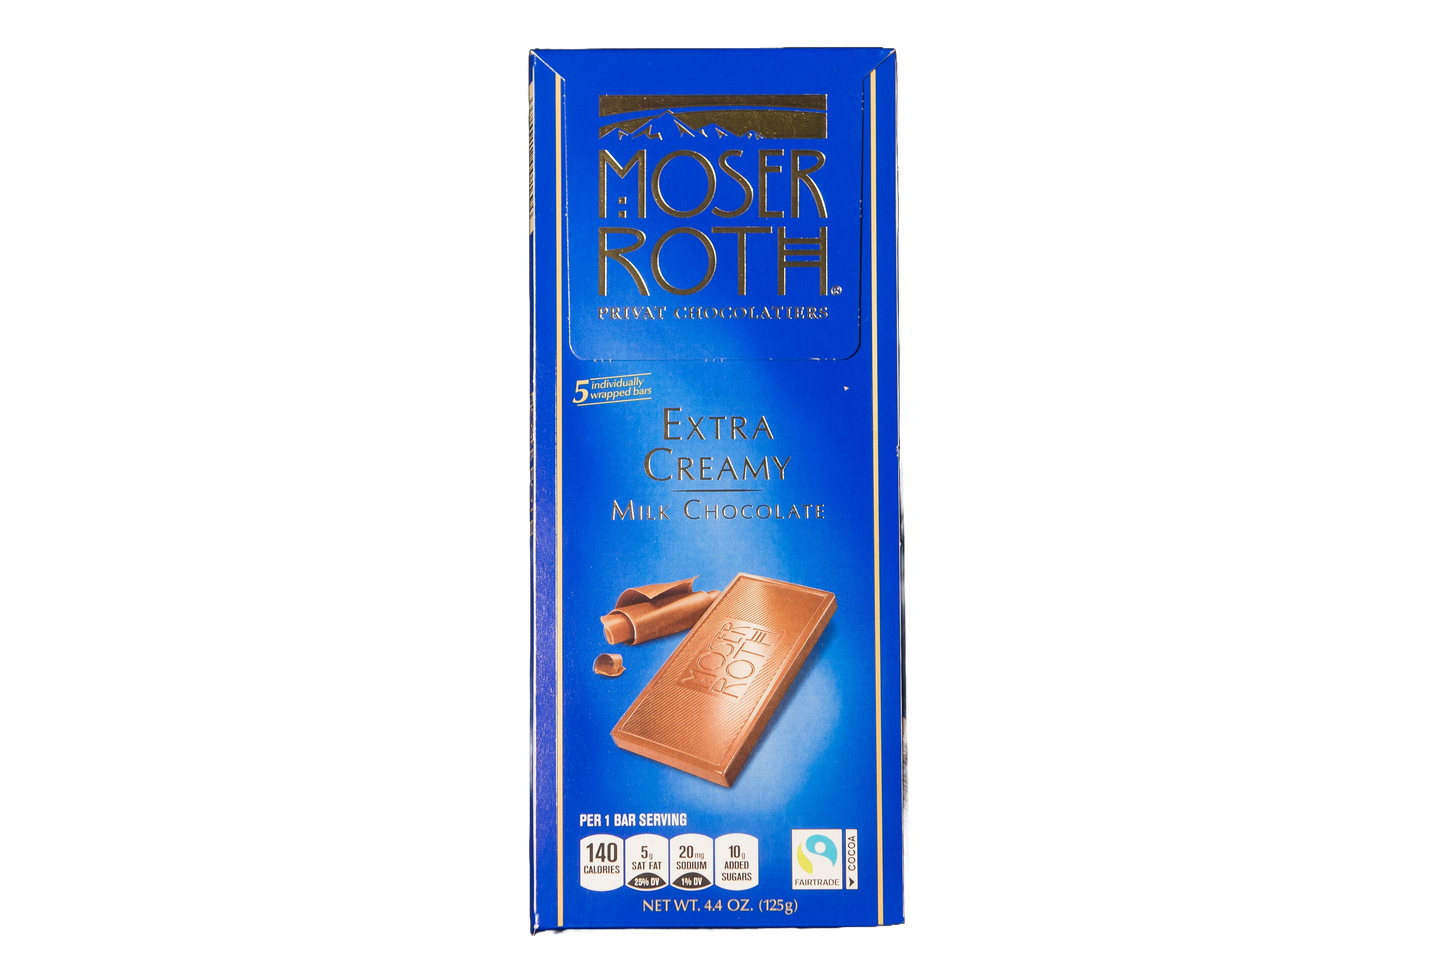 Moser Roth Extra Creamy Milk Chocolate Bar, 4.4 oz